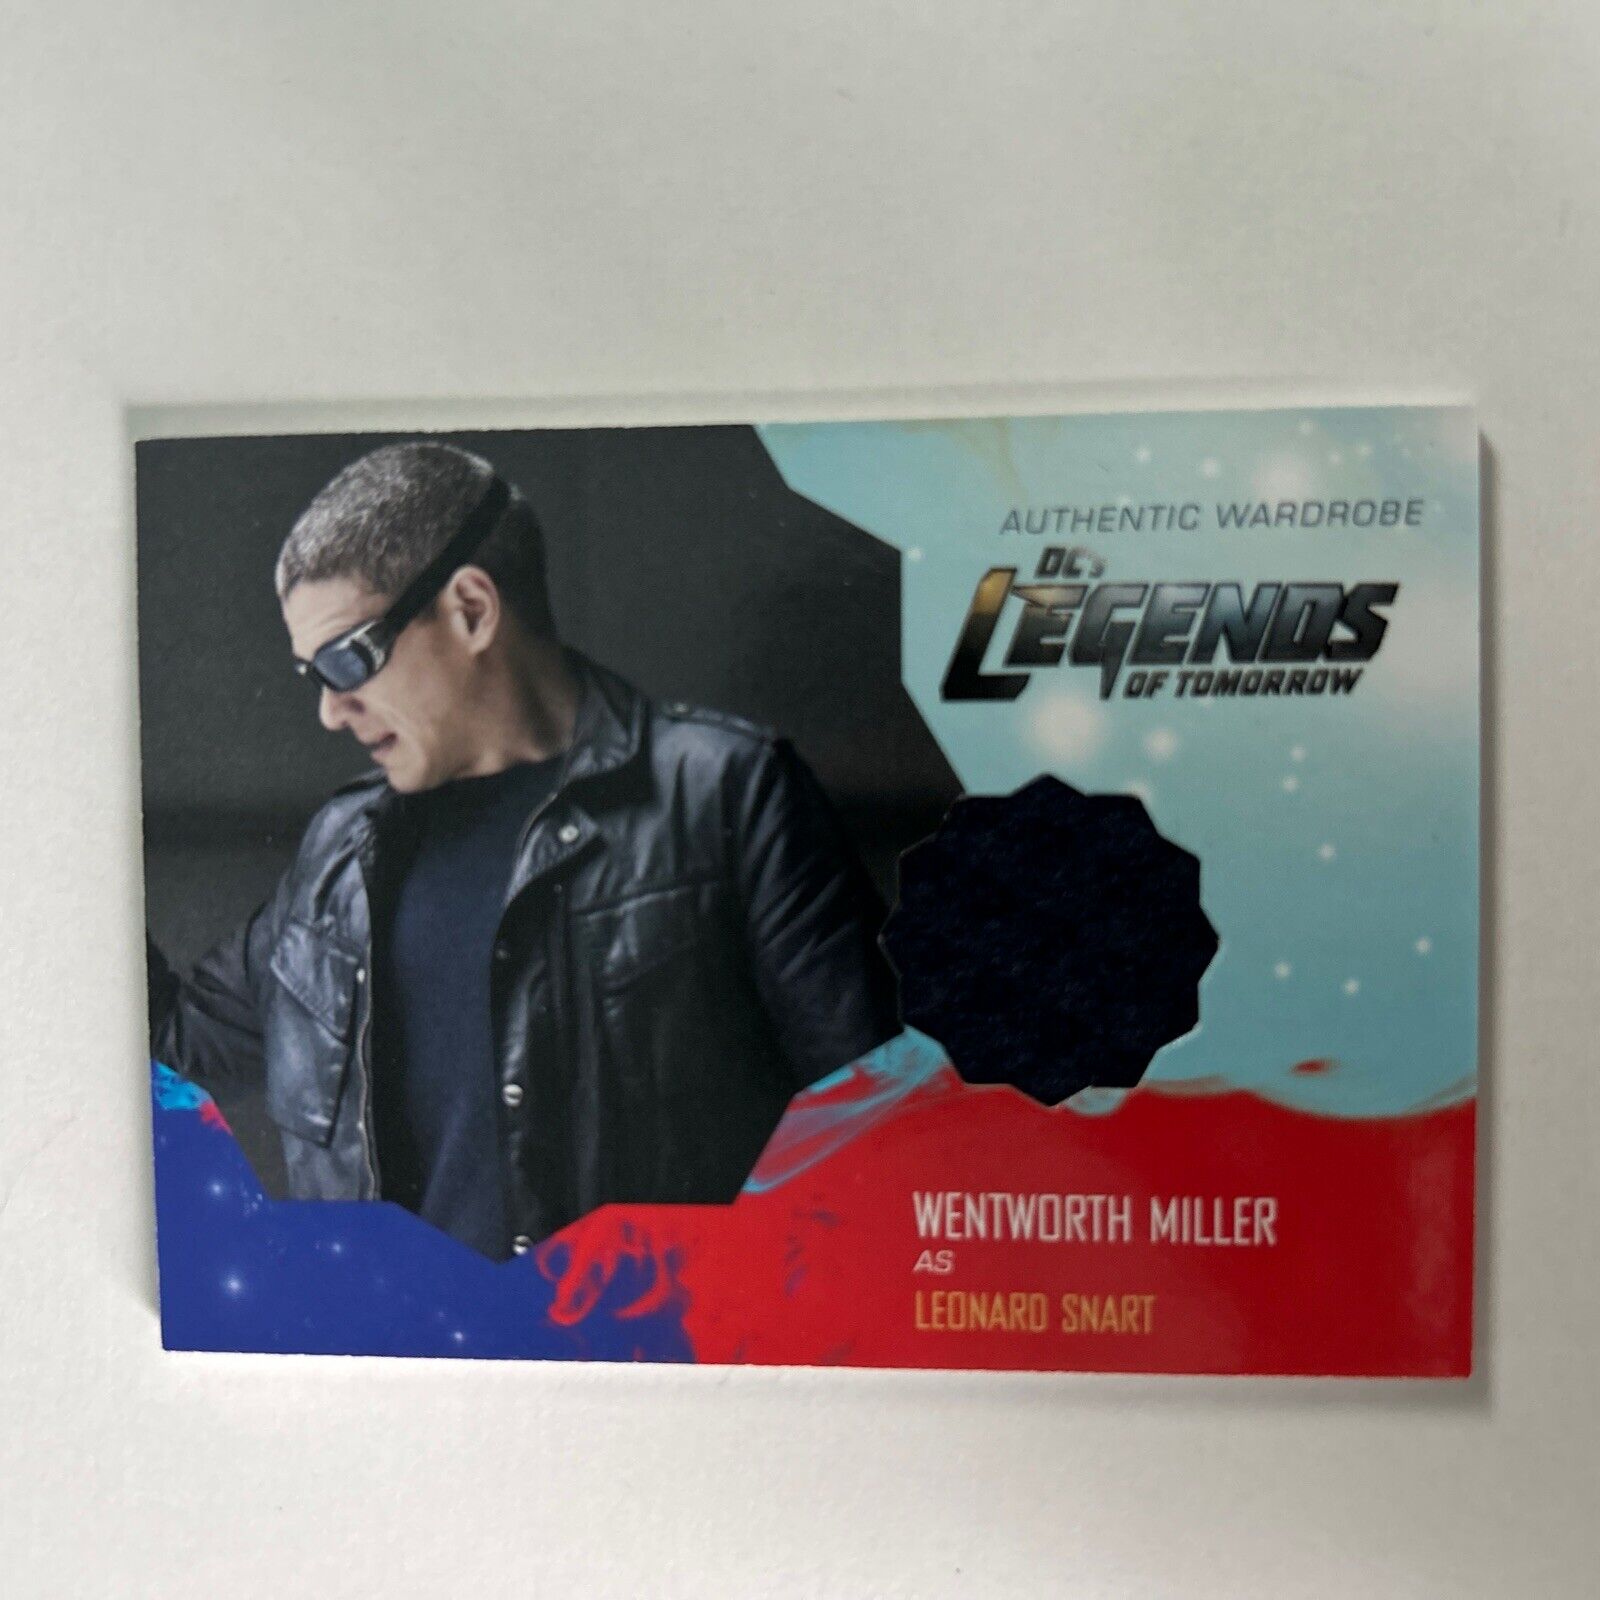 2018 Cryptozoic Legends Of Tomorrow Wentworth Miller Wardrobe Card MO4